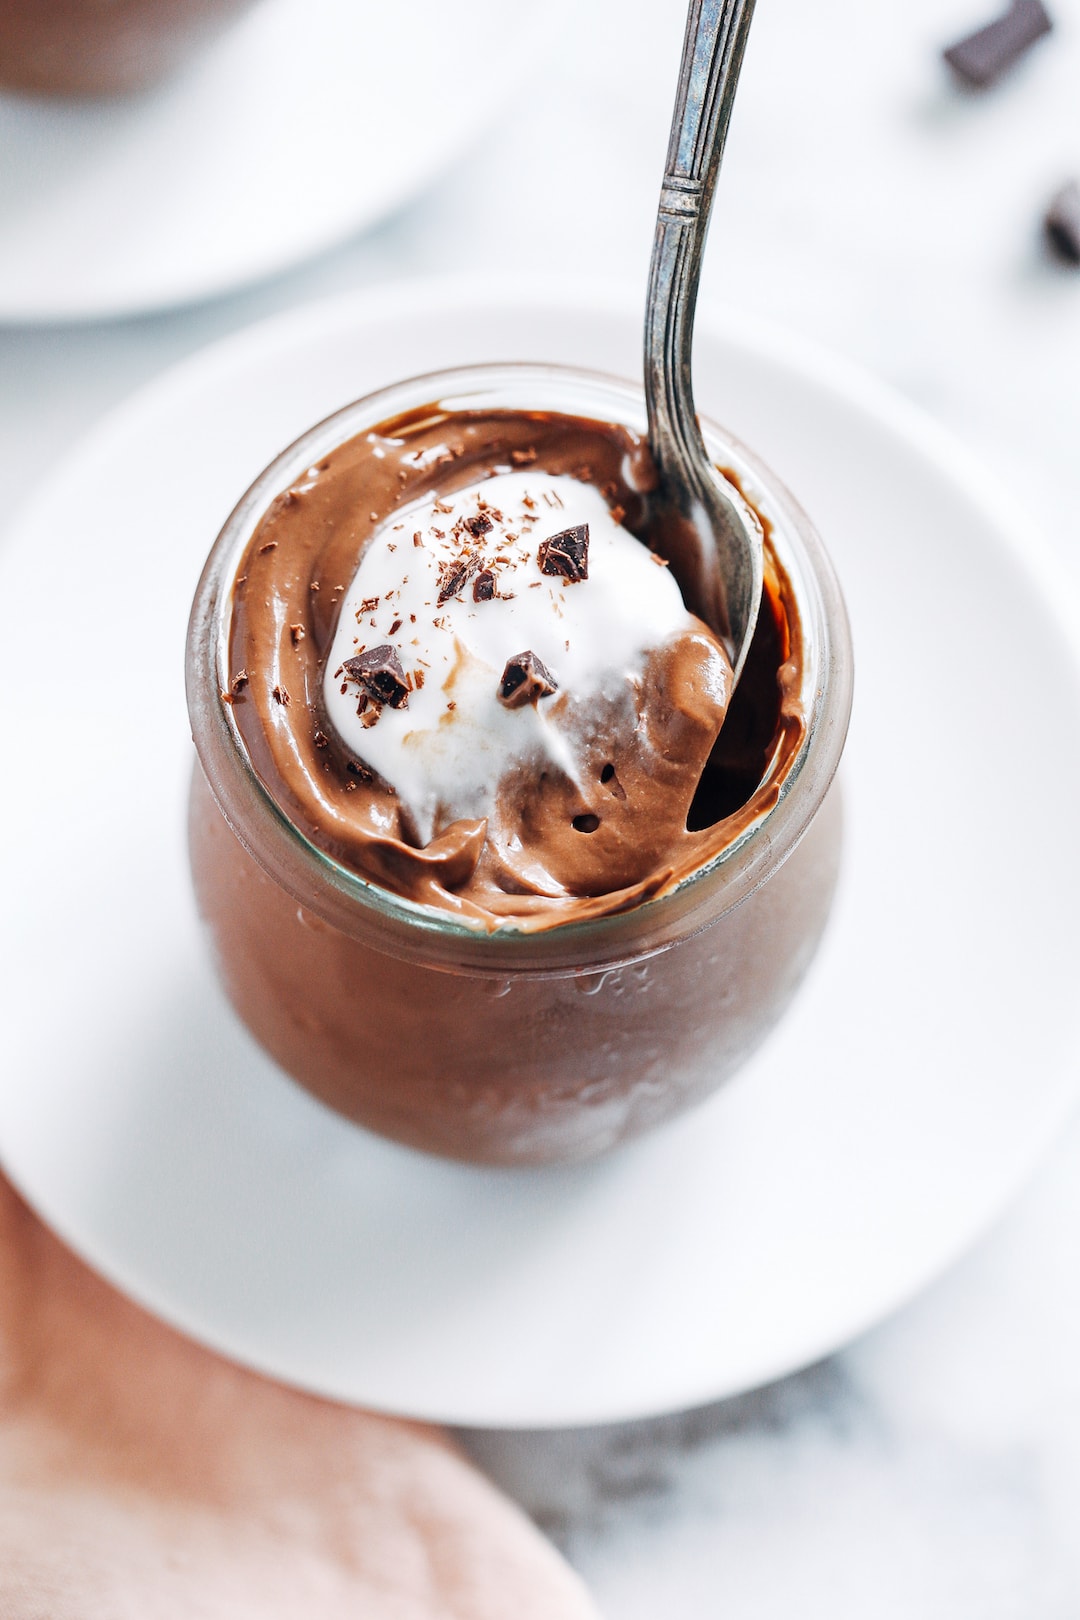 12 Super Easy Plant Based Desserts - Chocolate Avocado Pudding